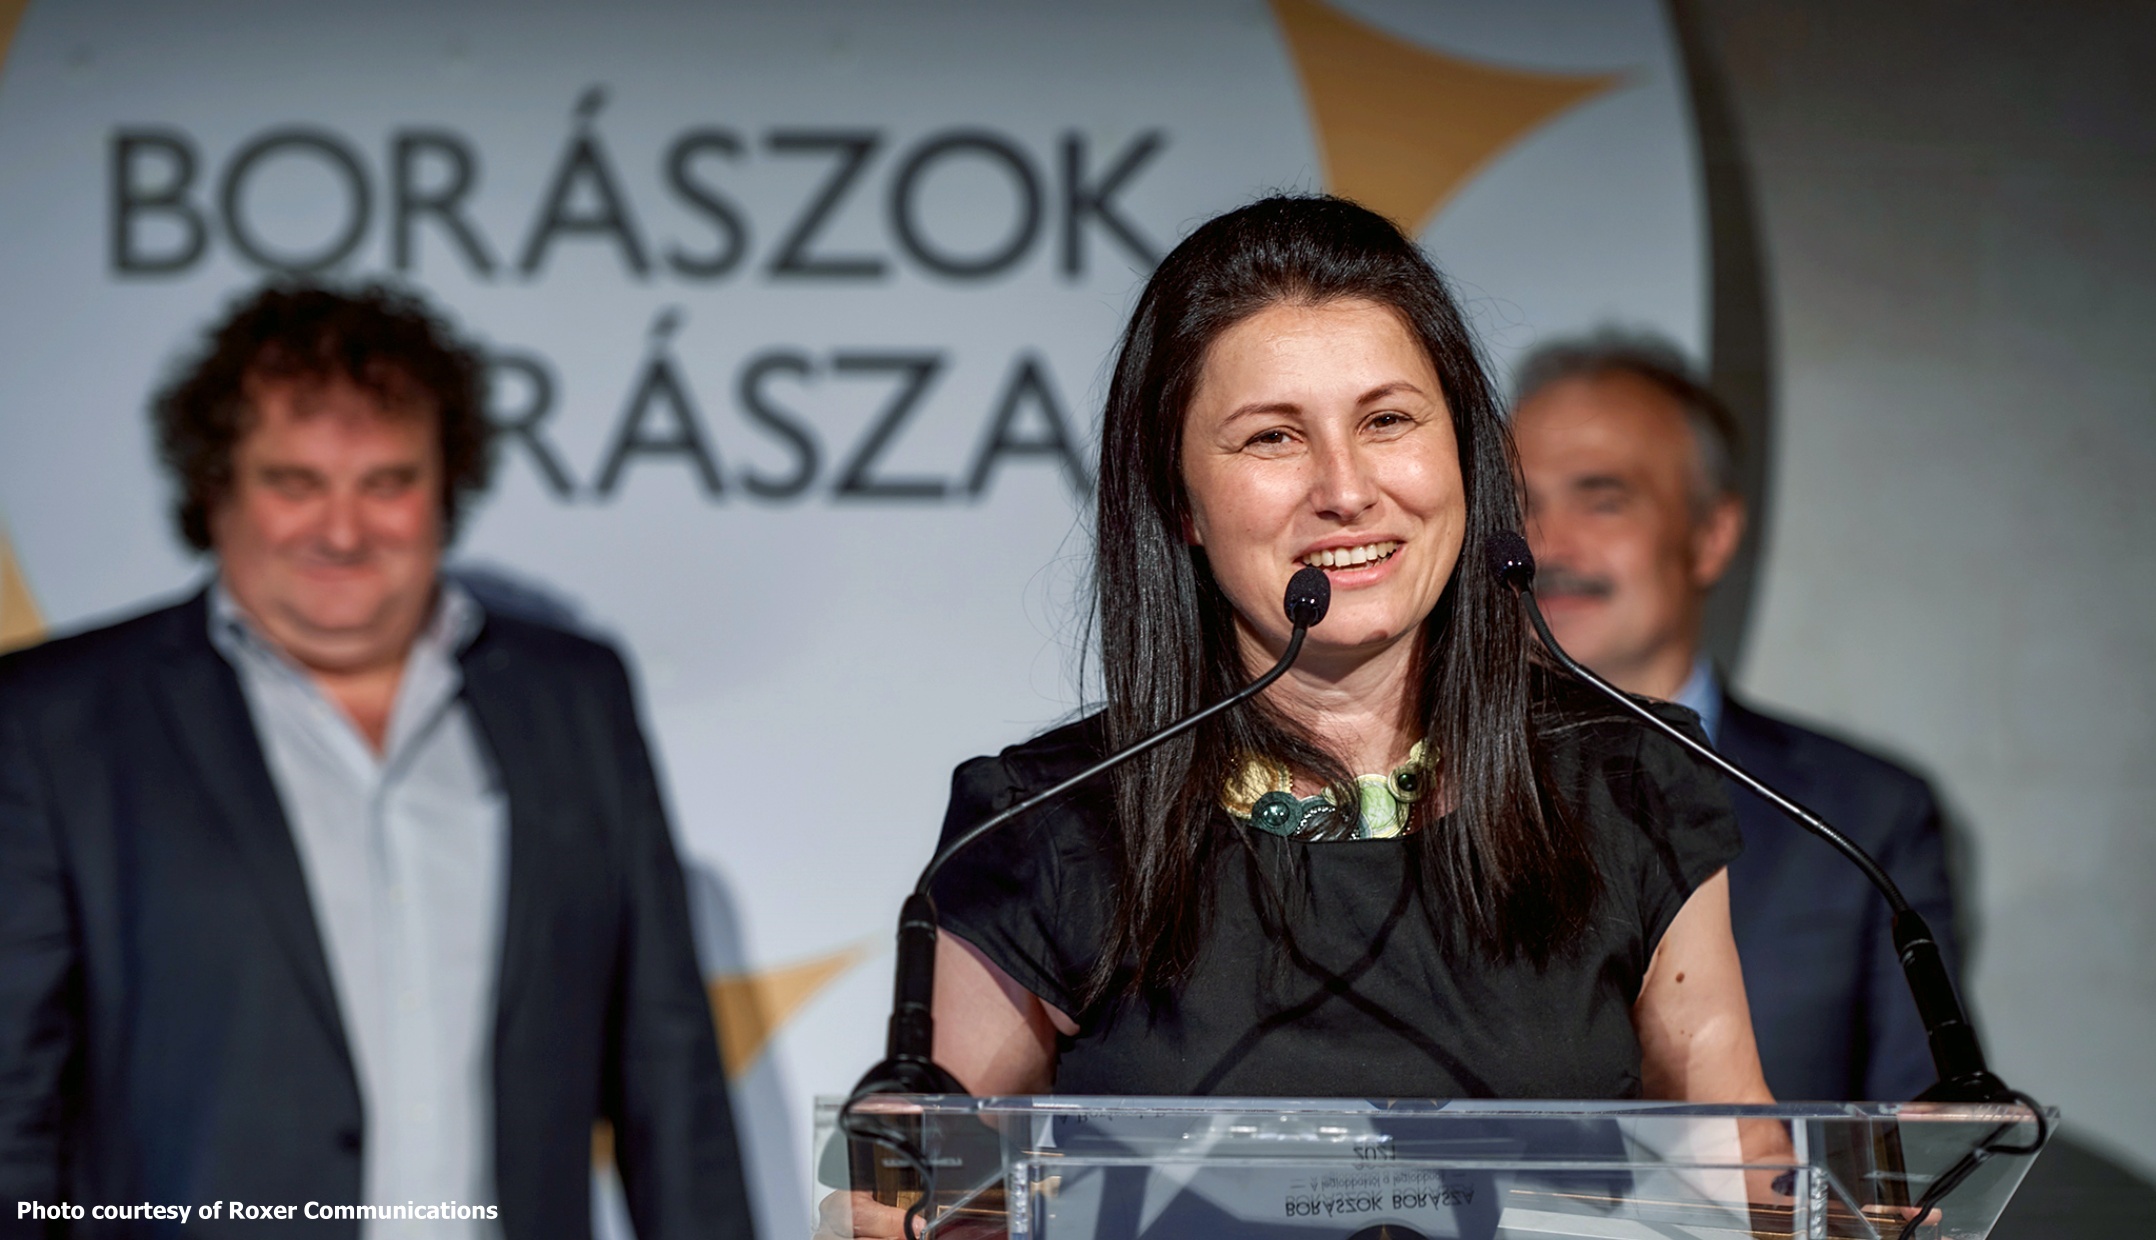 Judit Bodó Voted 'Winemaker of Winemakers' in 2021